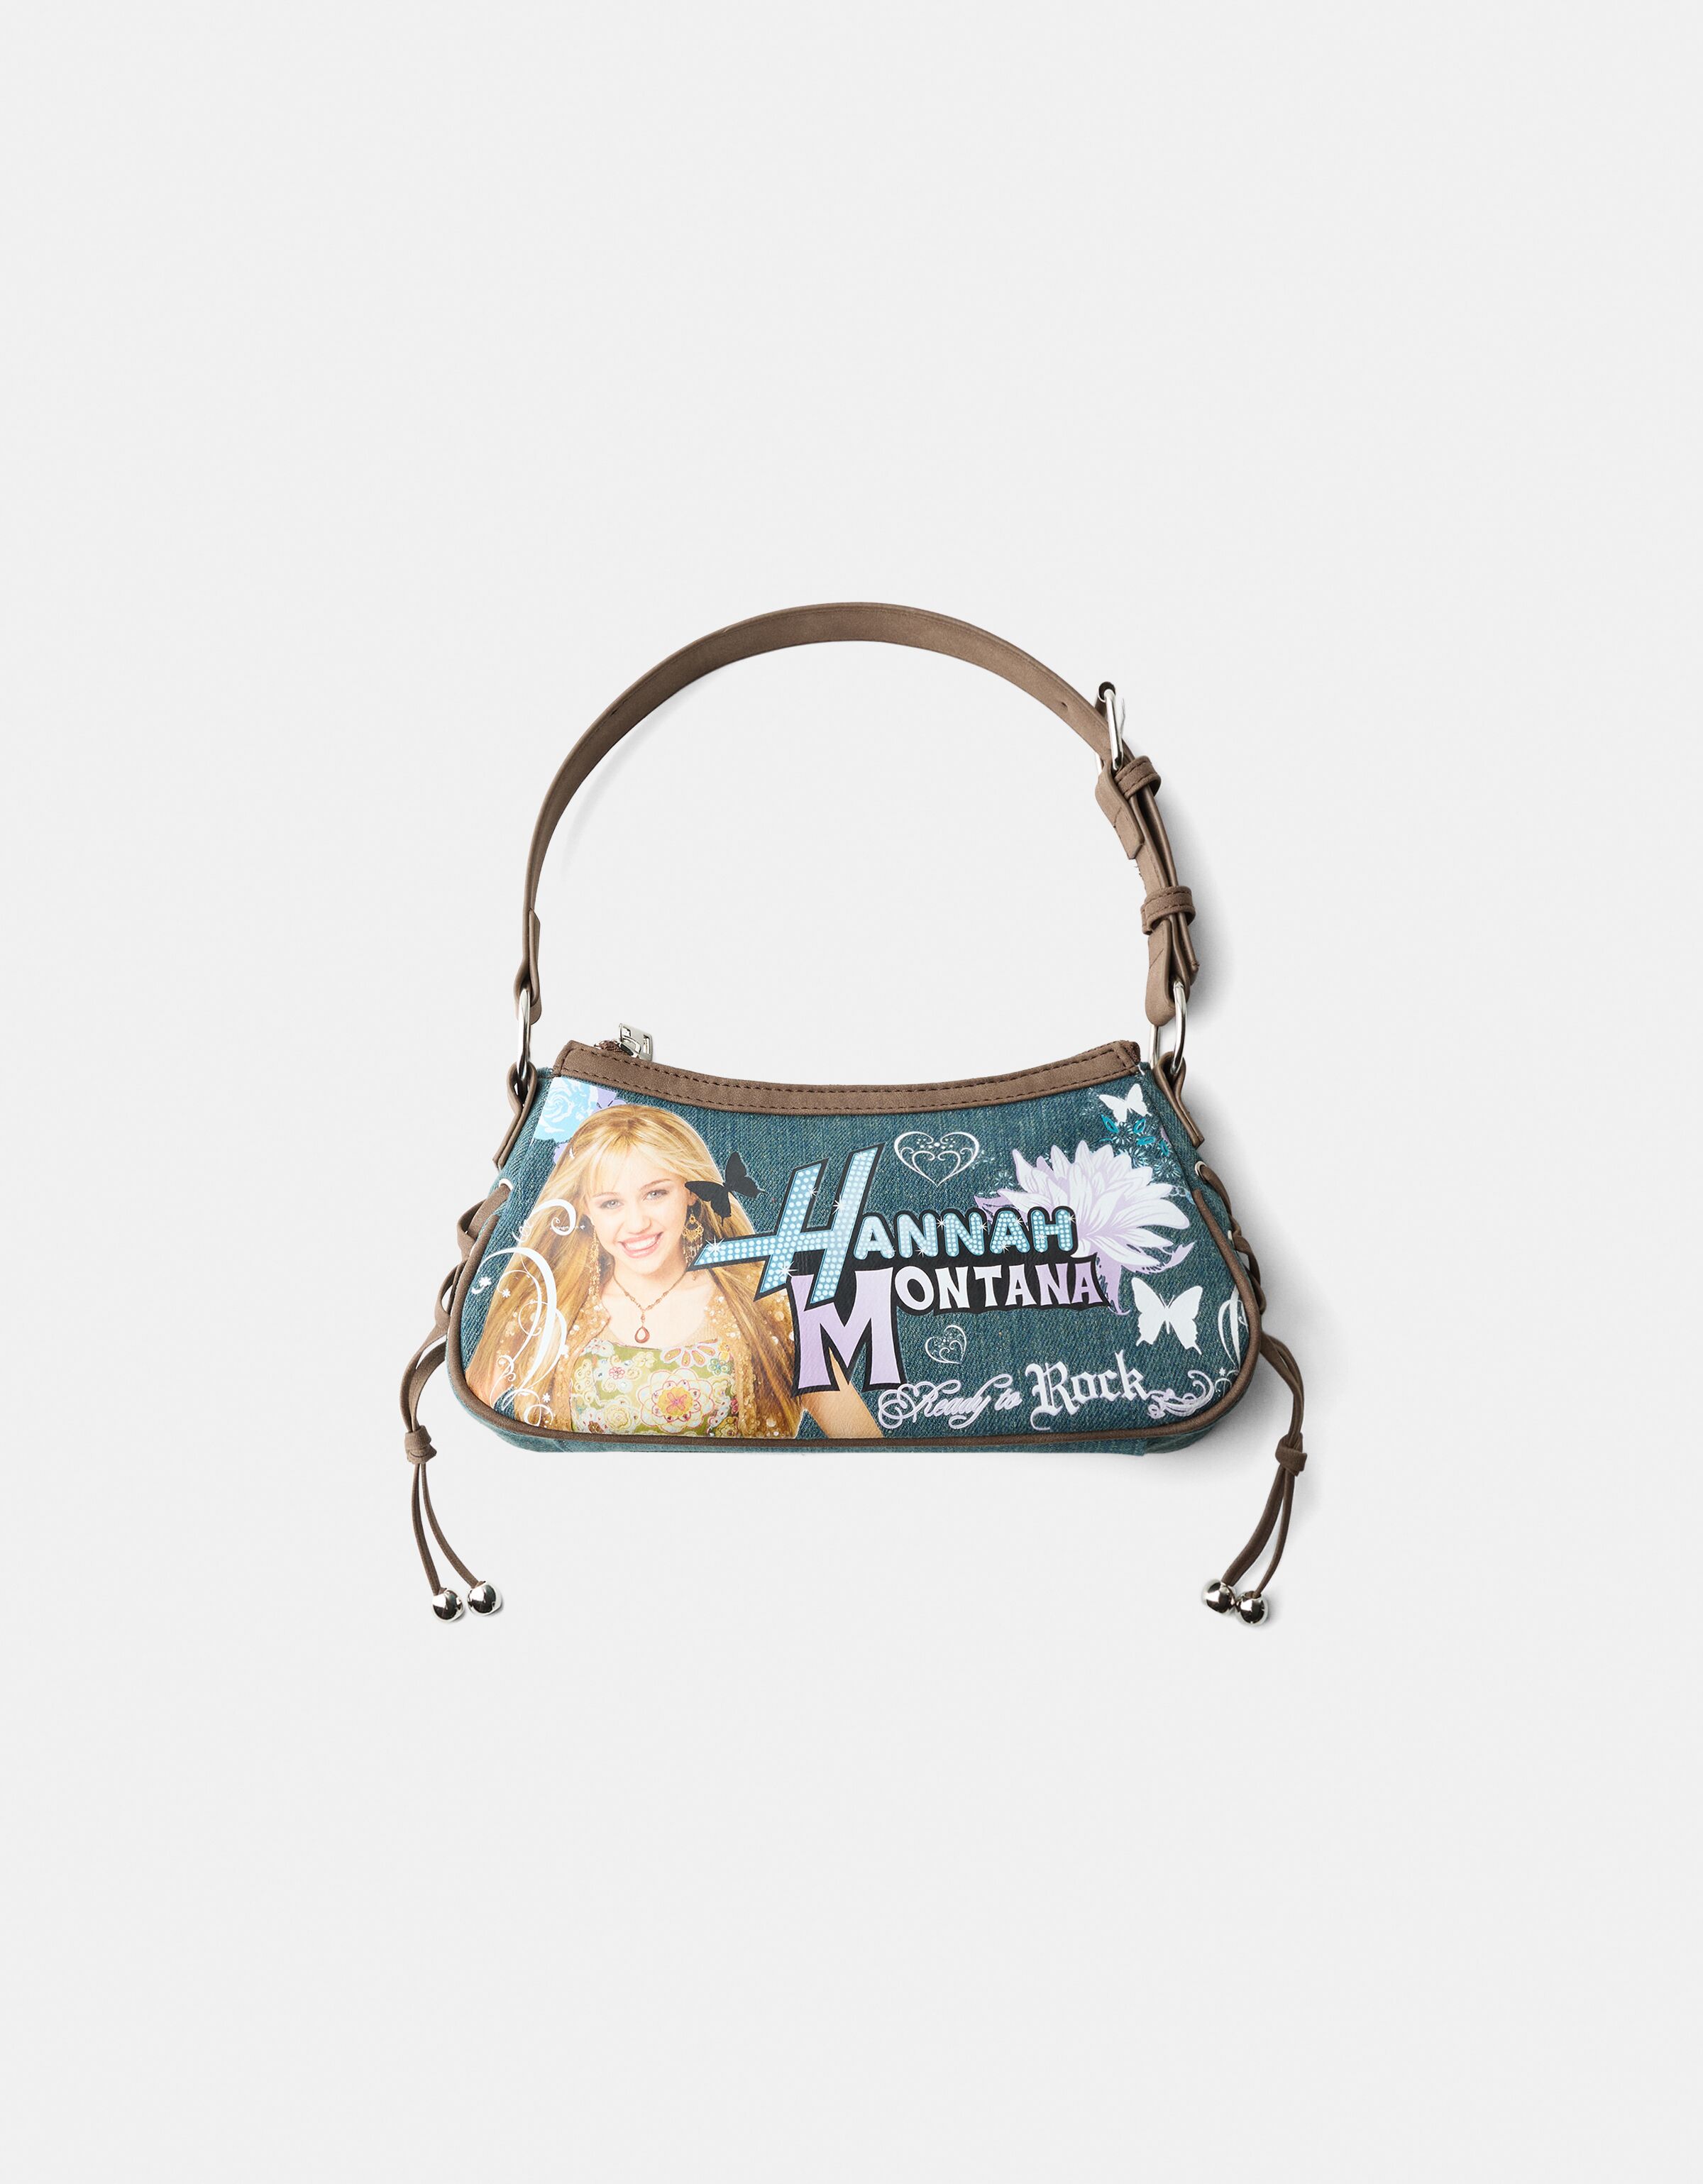 Hannah Montana bitsy bag | Bags, Hannah montana, Montana